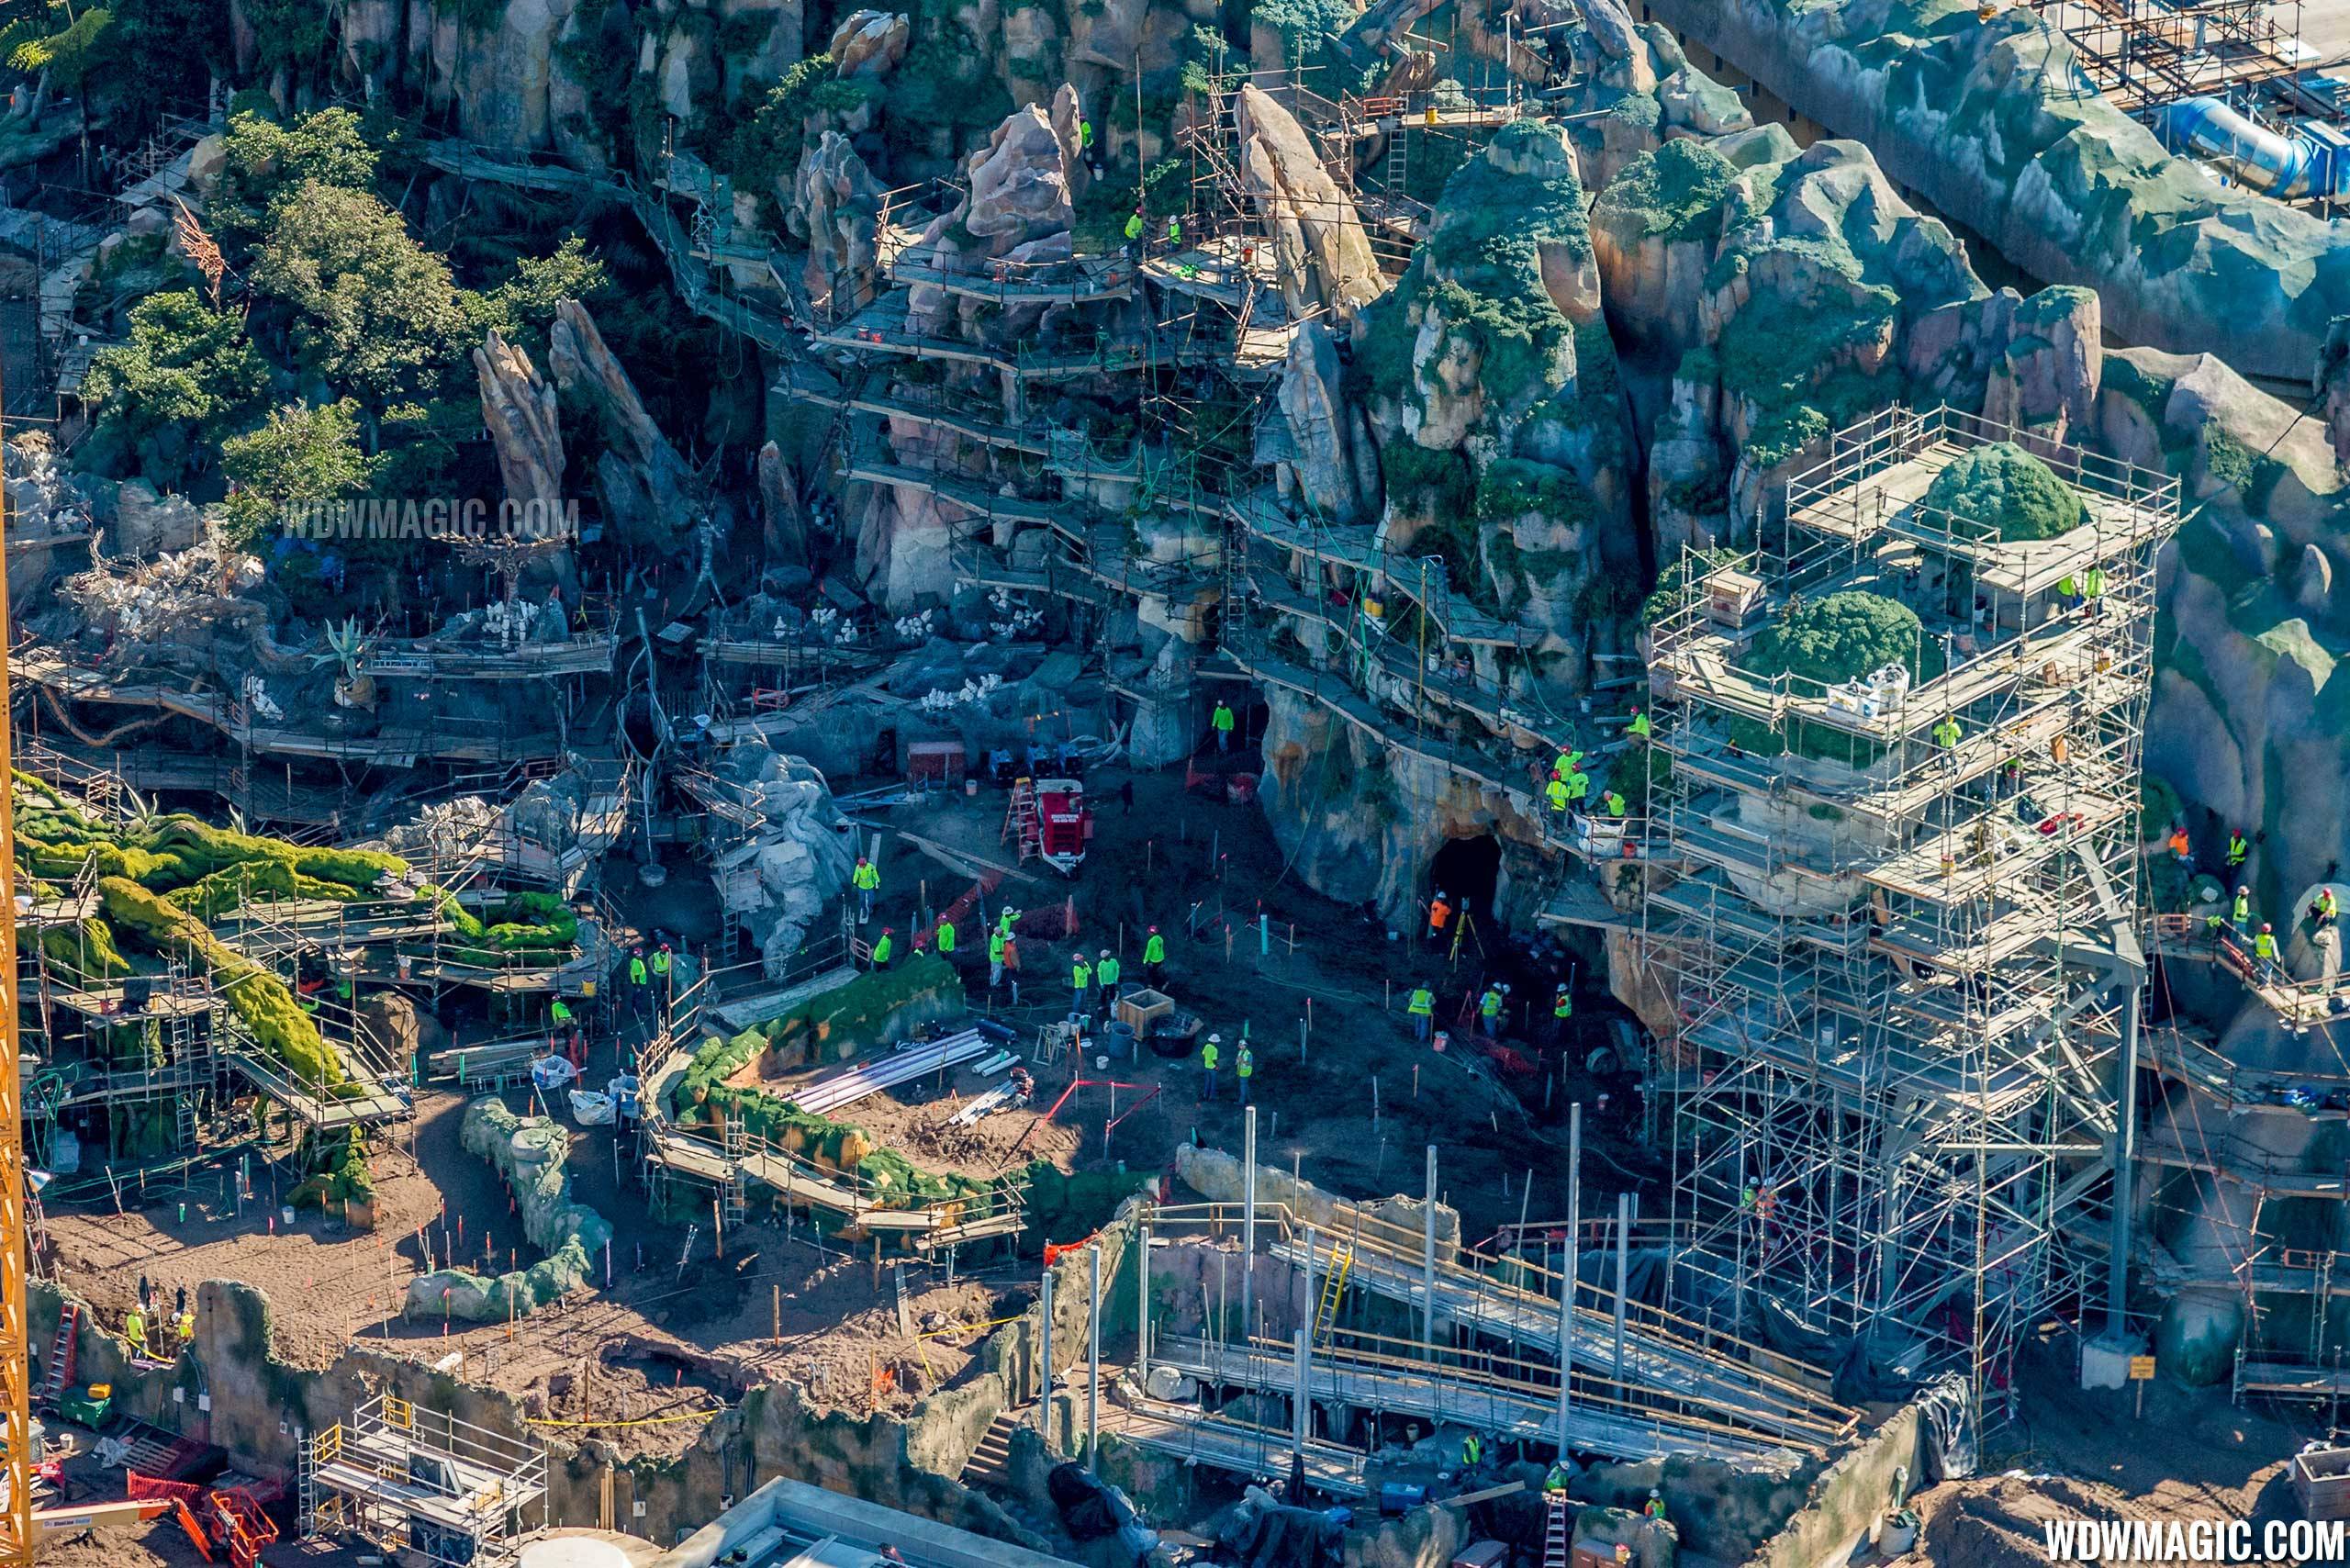 Aerial views of 'Pandora - The World of Avatar' under construction